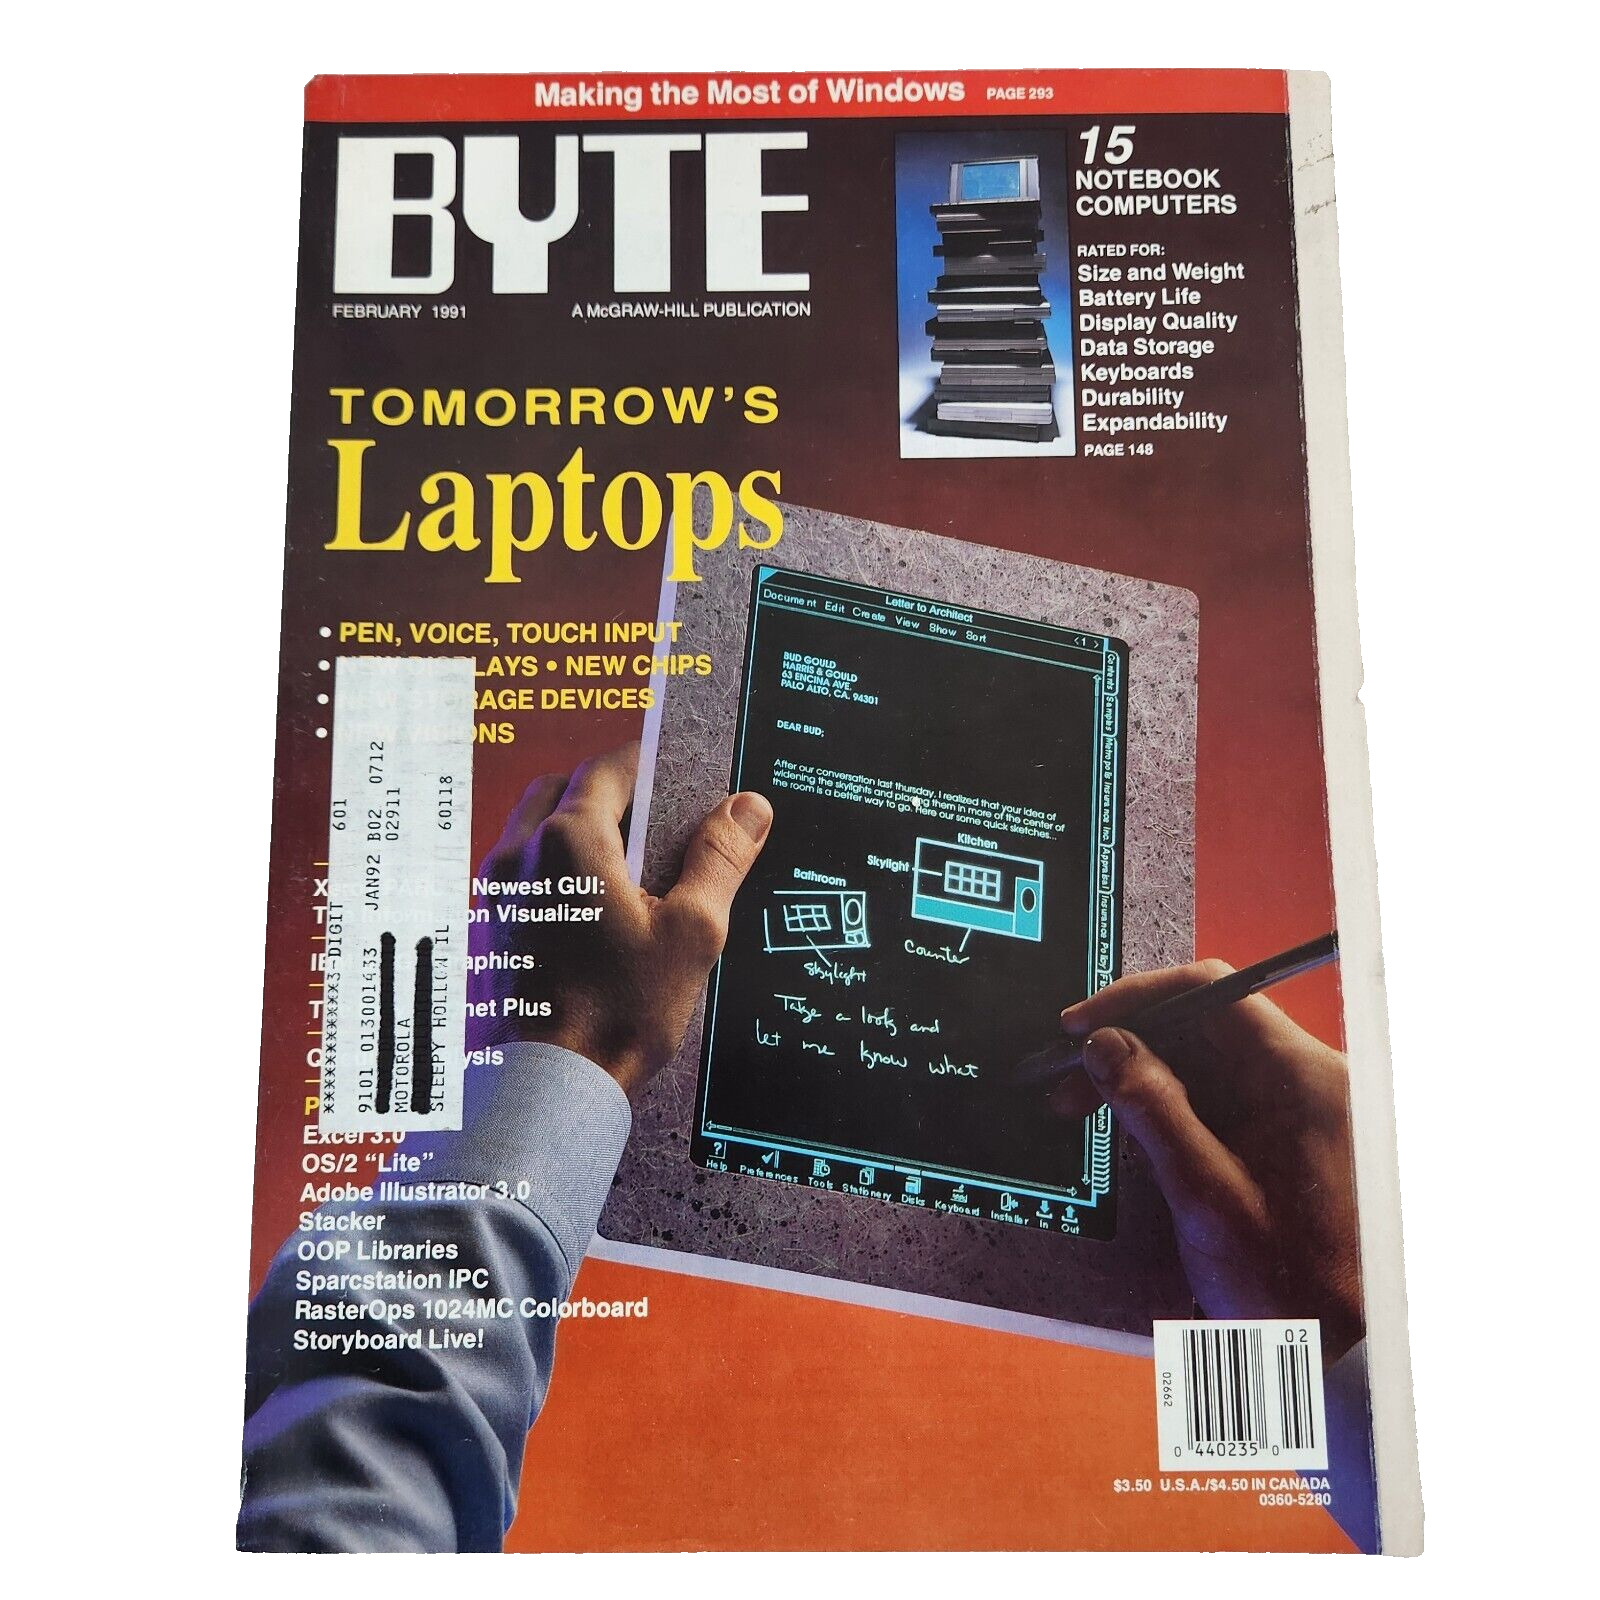 Vintage February 1991 BYTE Magazine - Tomorrow\'s Laptops - 15 Notebook Computers